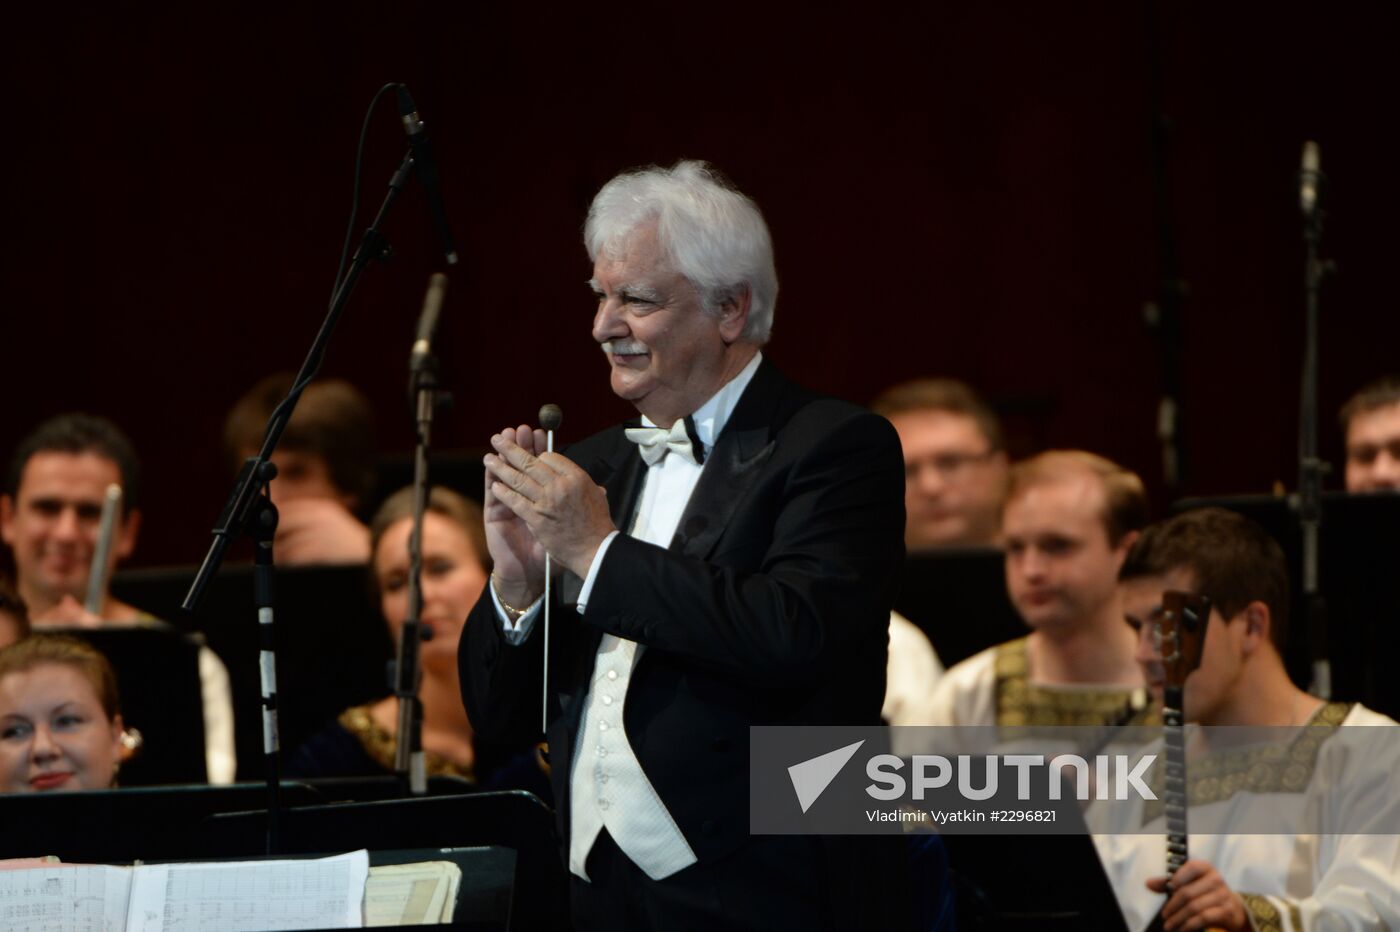 Anniversary concert of Vladimir Matorin